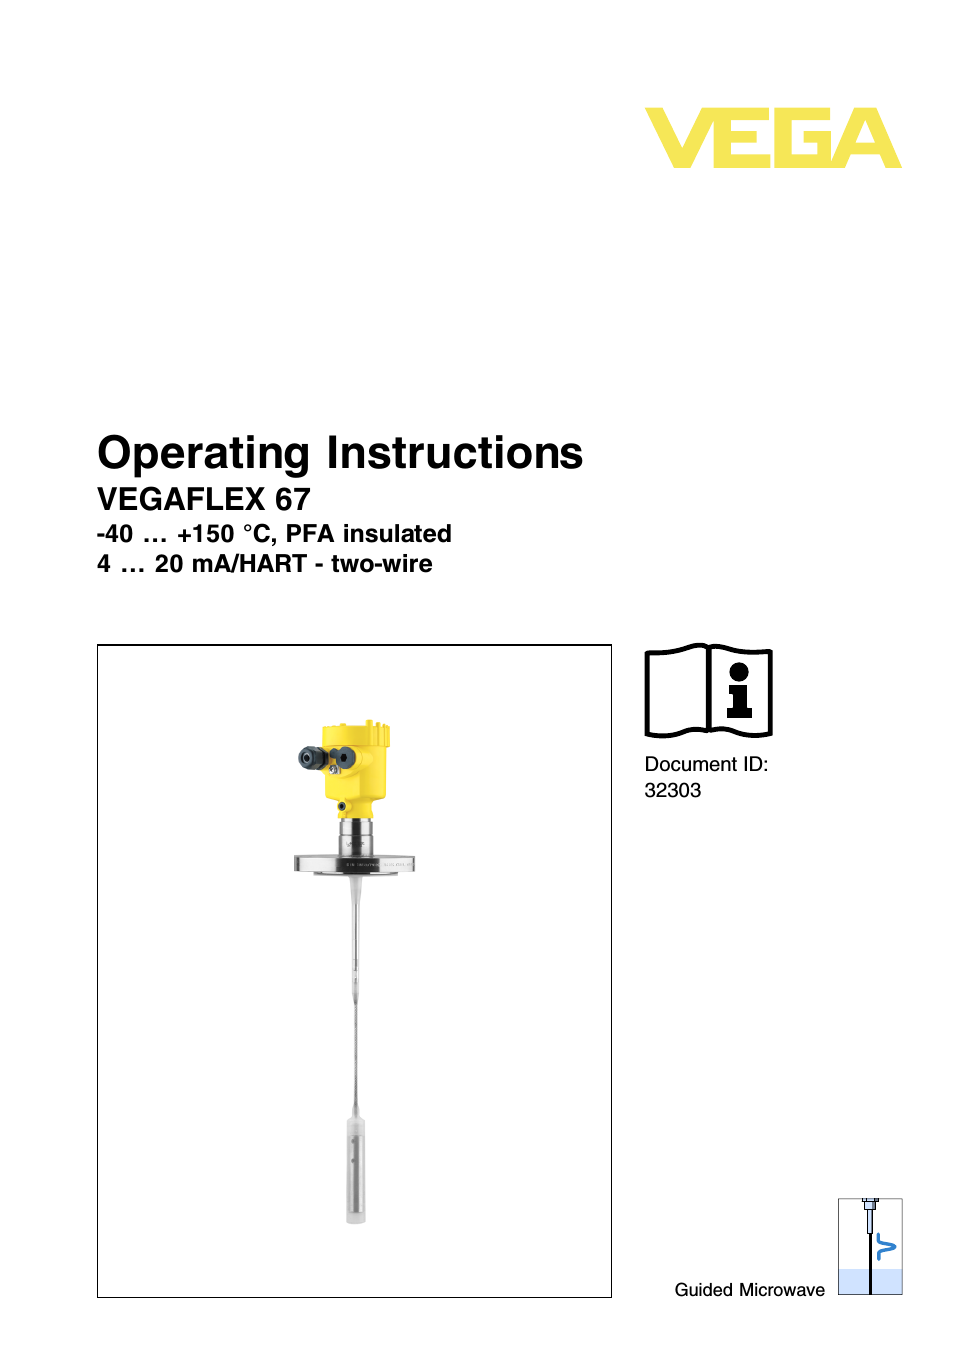 VEGAFLEX 67 (-40…+150°C PFA insulated) 4 … 20 mA_HART two-wire